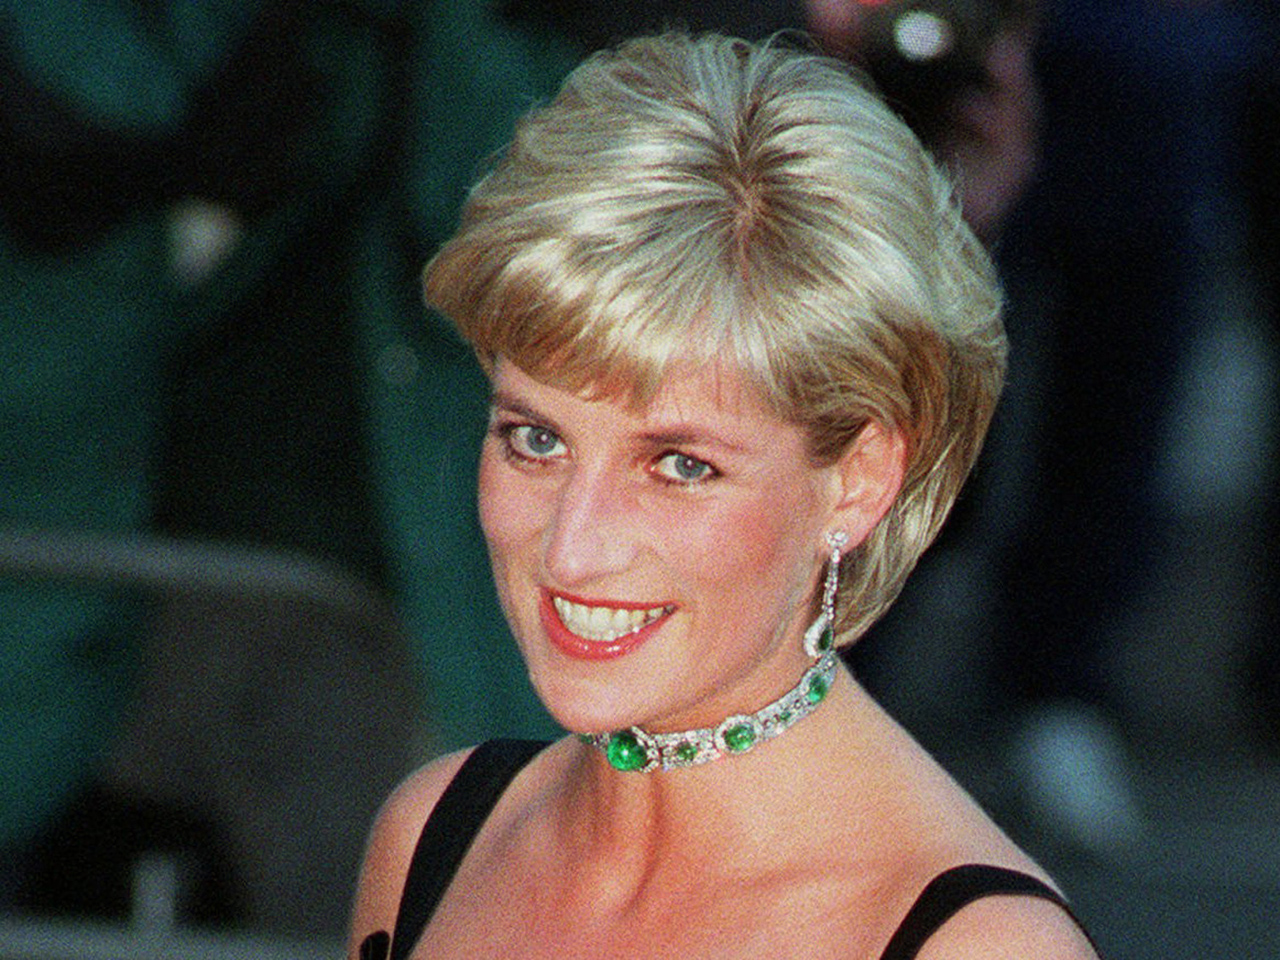 The People's Princess - Princess Diana: A photo album - Pictures - CBS News